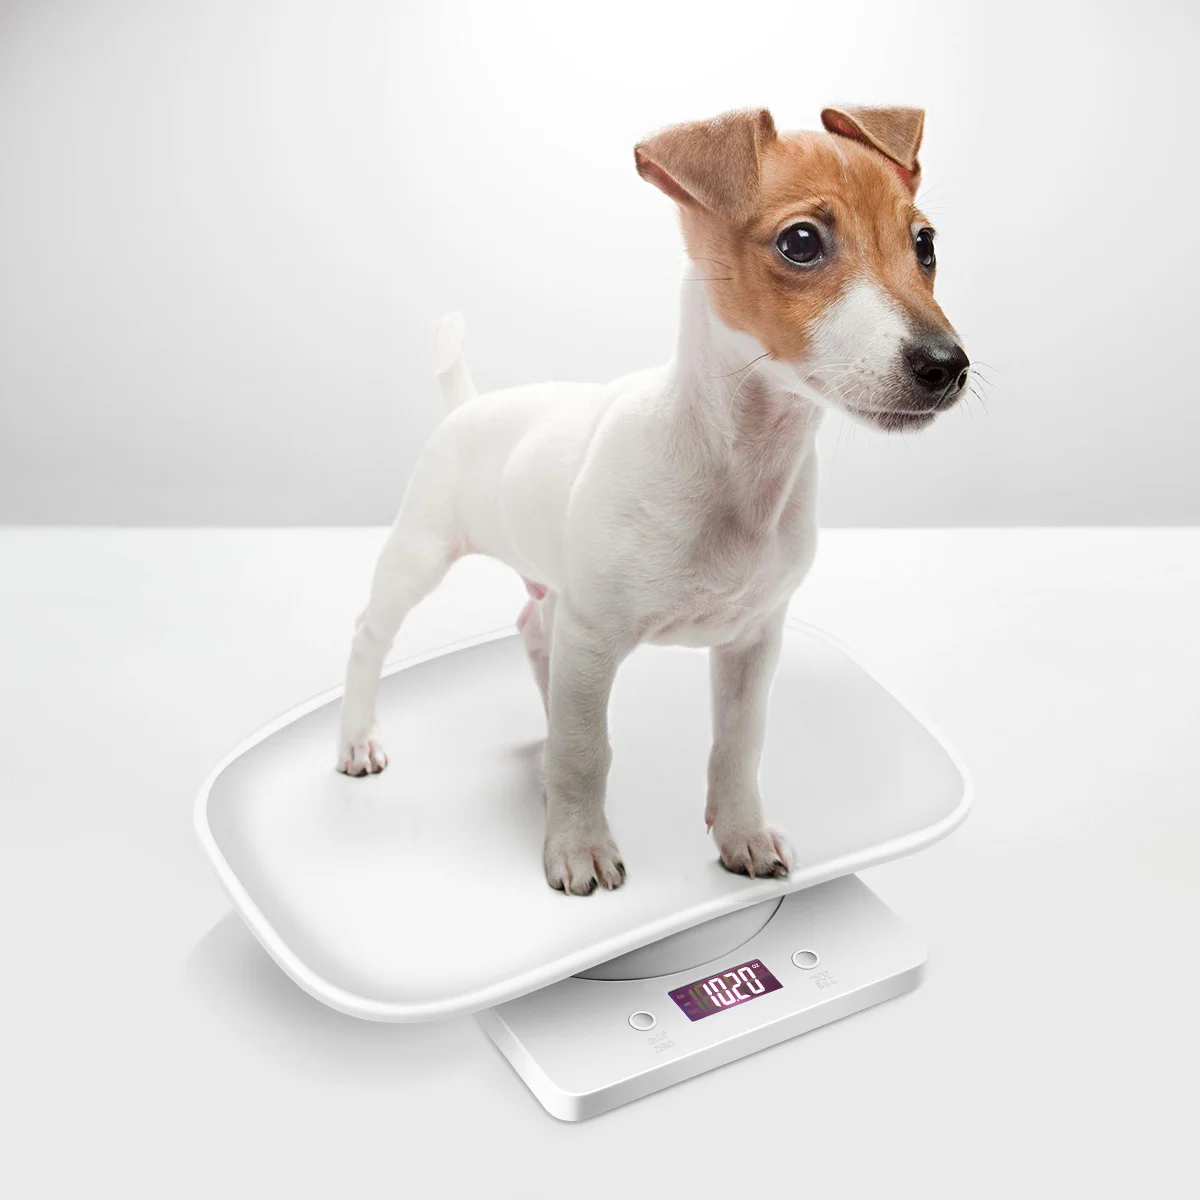 https://ae01.alicdn.com/kf/Sd79302dd644340d89c35ce787435286dn/Pets-Weighbridge-Dog-Scale-Measure-Tool-Postal-Digital-Food-Weighing-Baby-Scales-Body-Weight.jpg